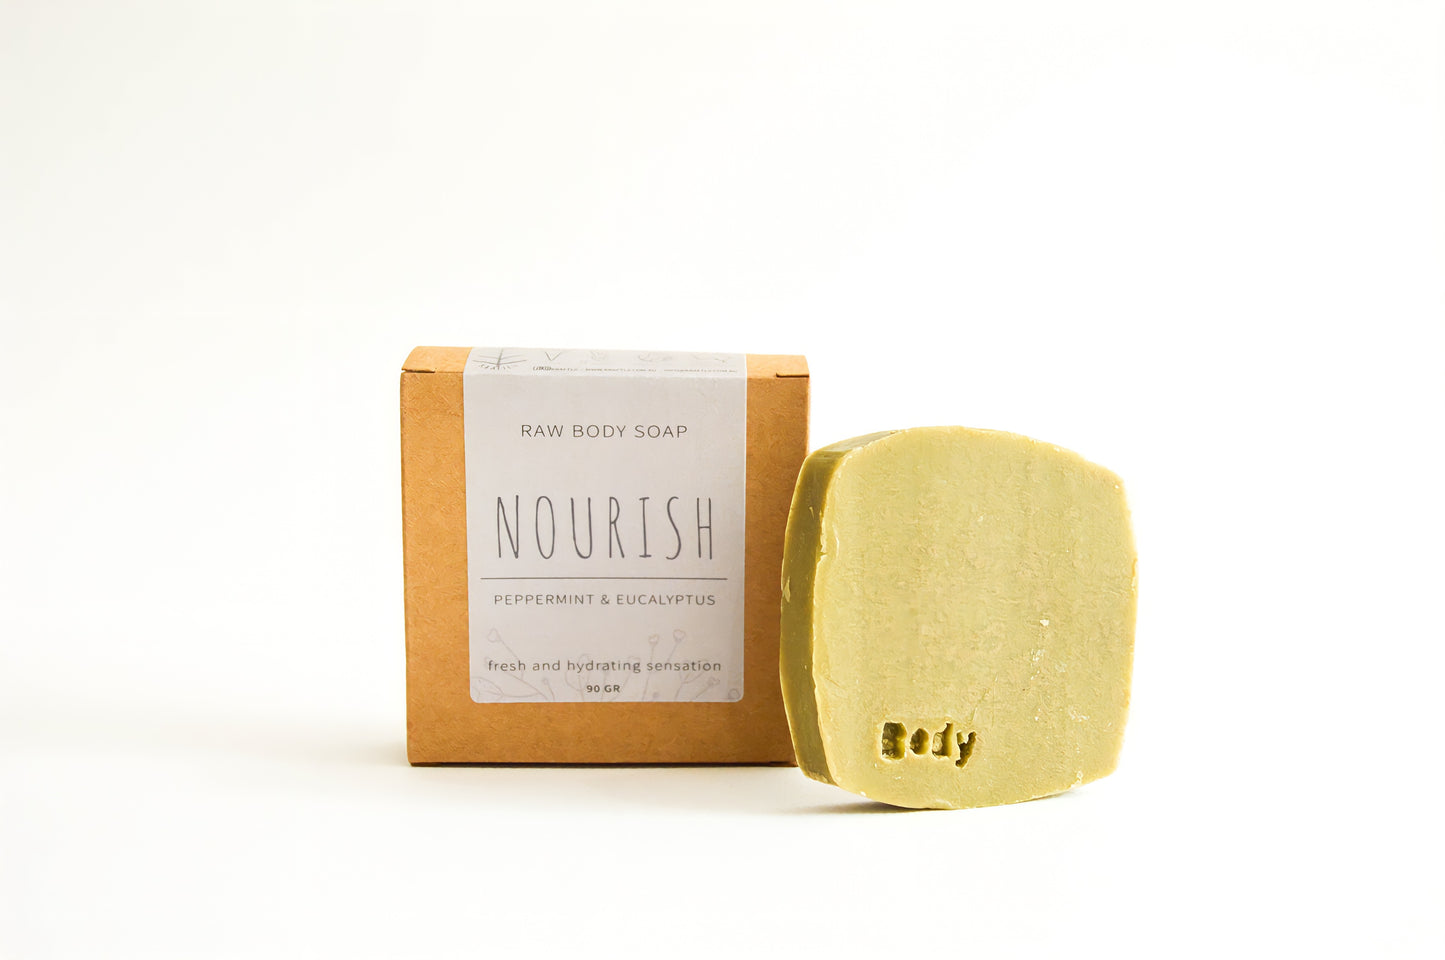 RAW BODY SOAP BAR - NOURISH with peppermint & eucalyptus